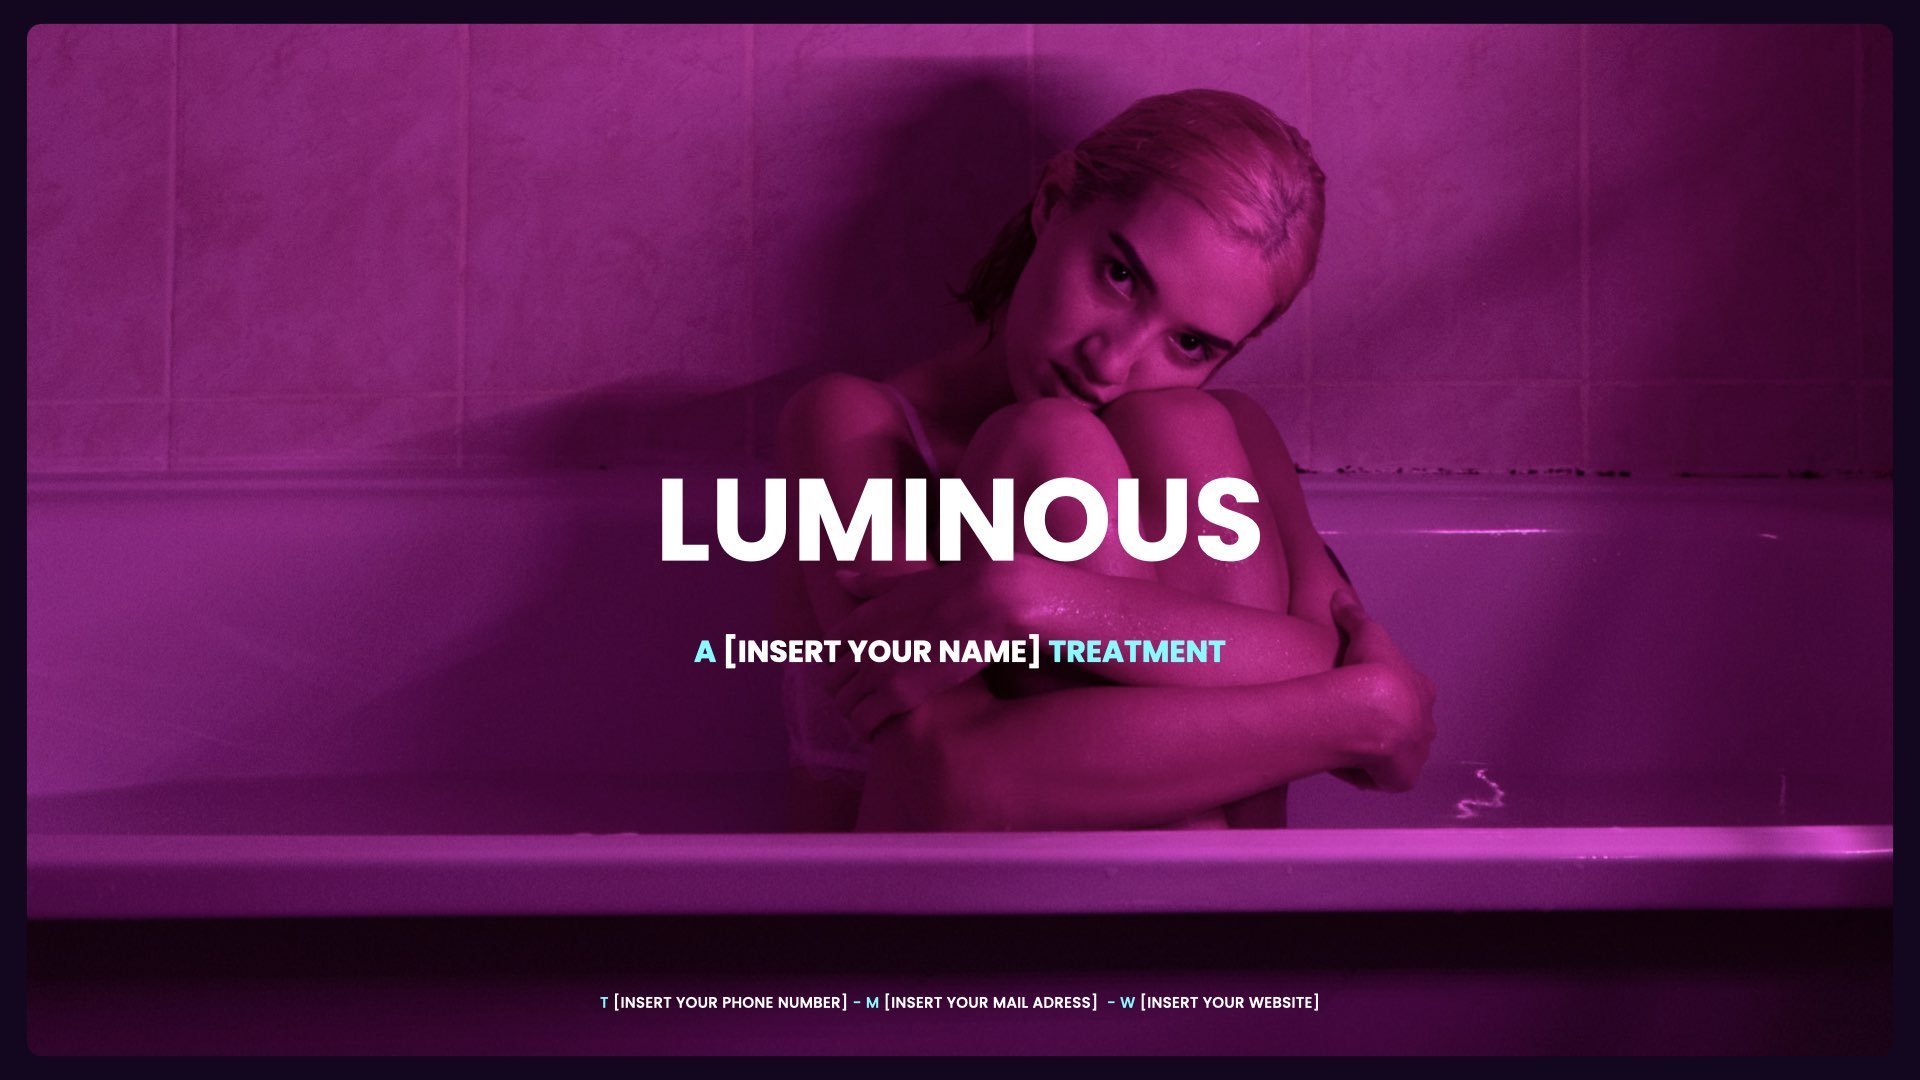 ‎Music Video Treatment Template - Luminous.‎001.jpeg